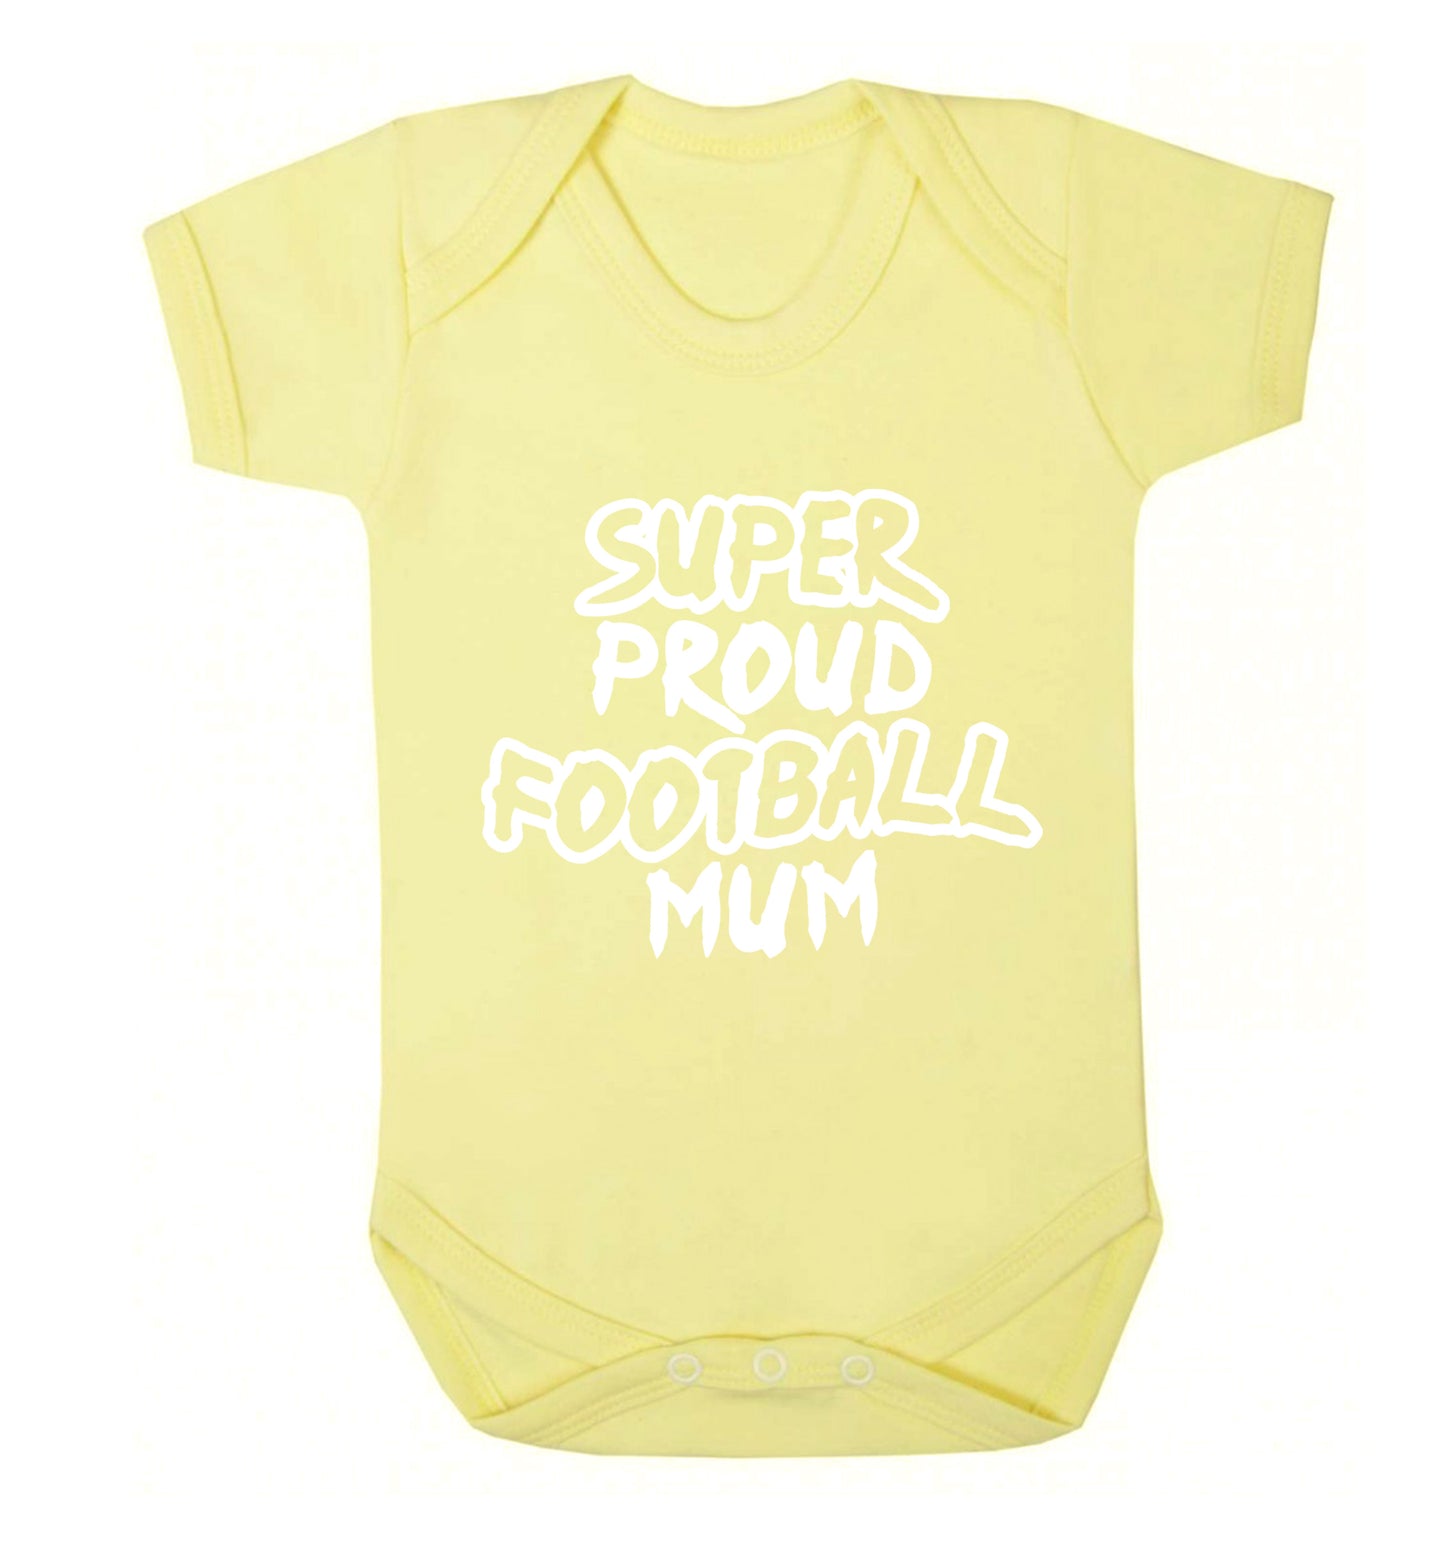 Super proud football mum Baby Vest pale yellow 18-24 months